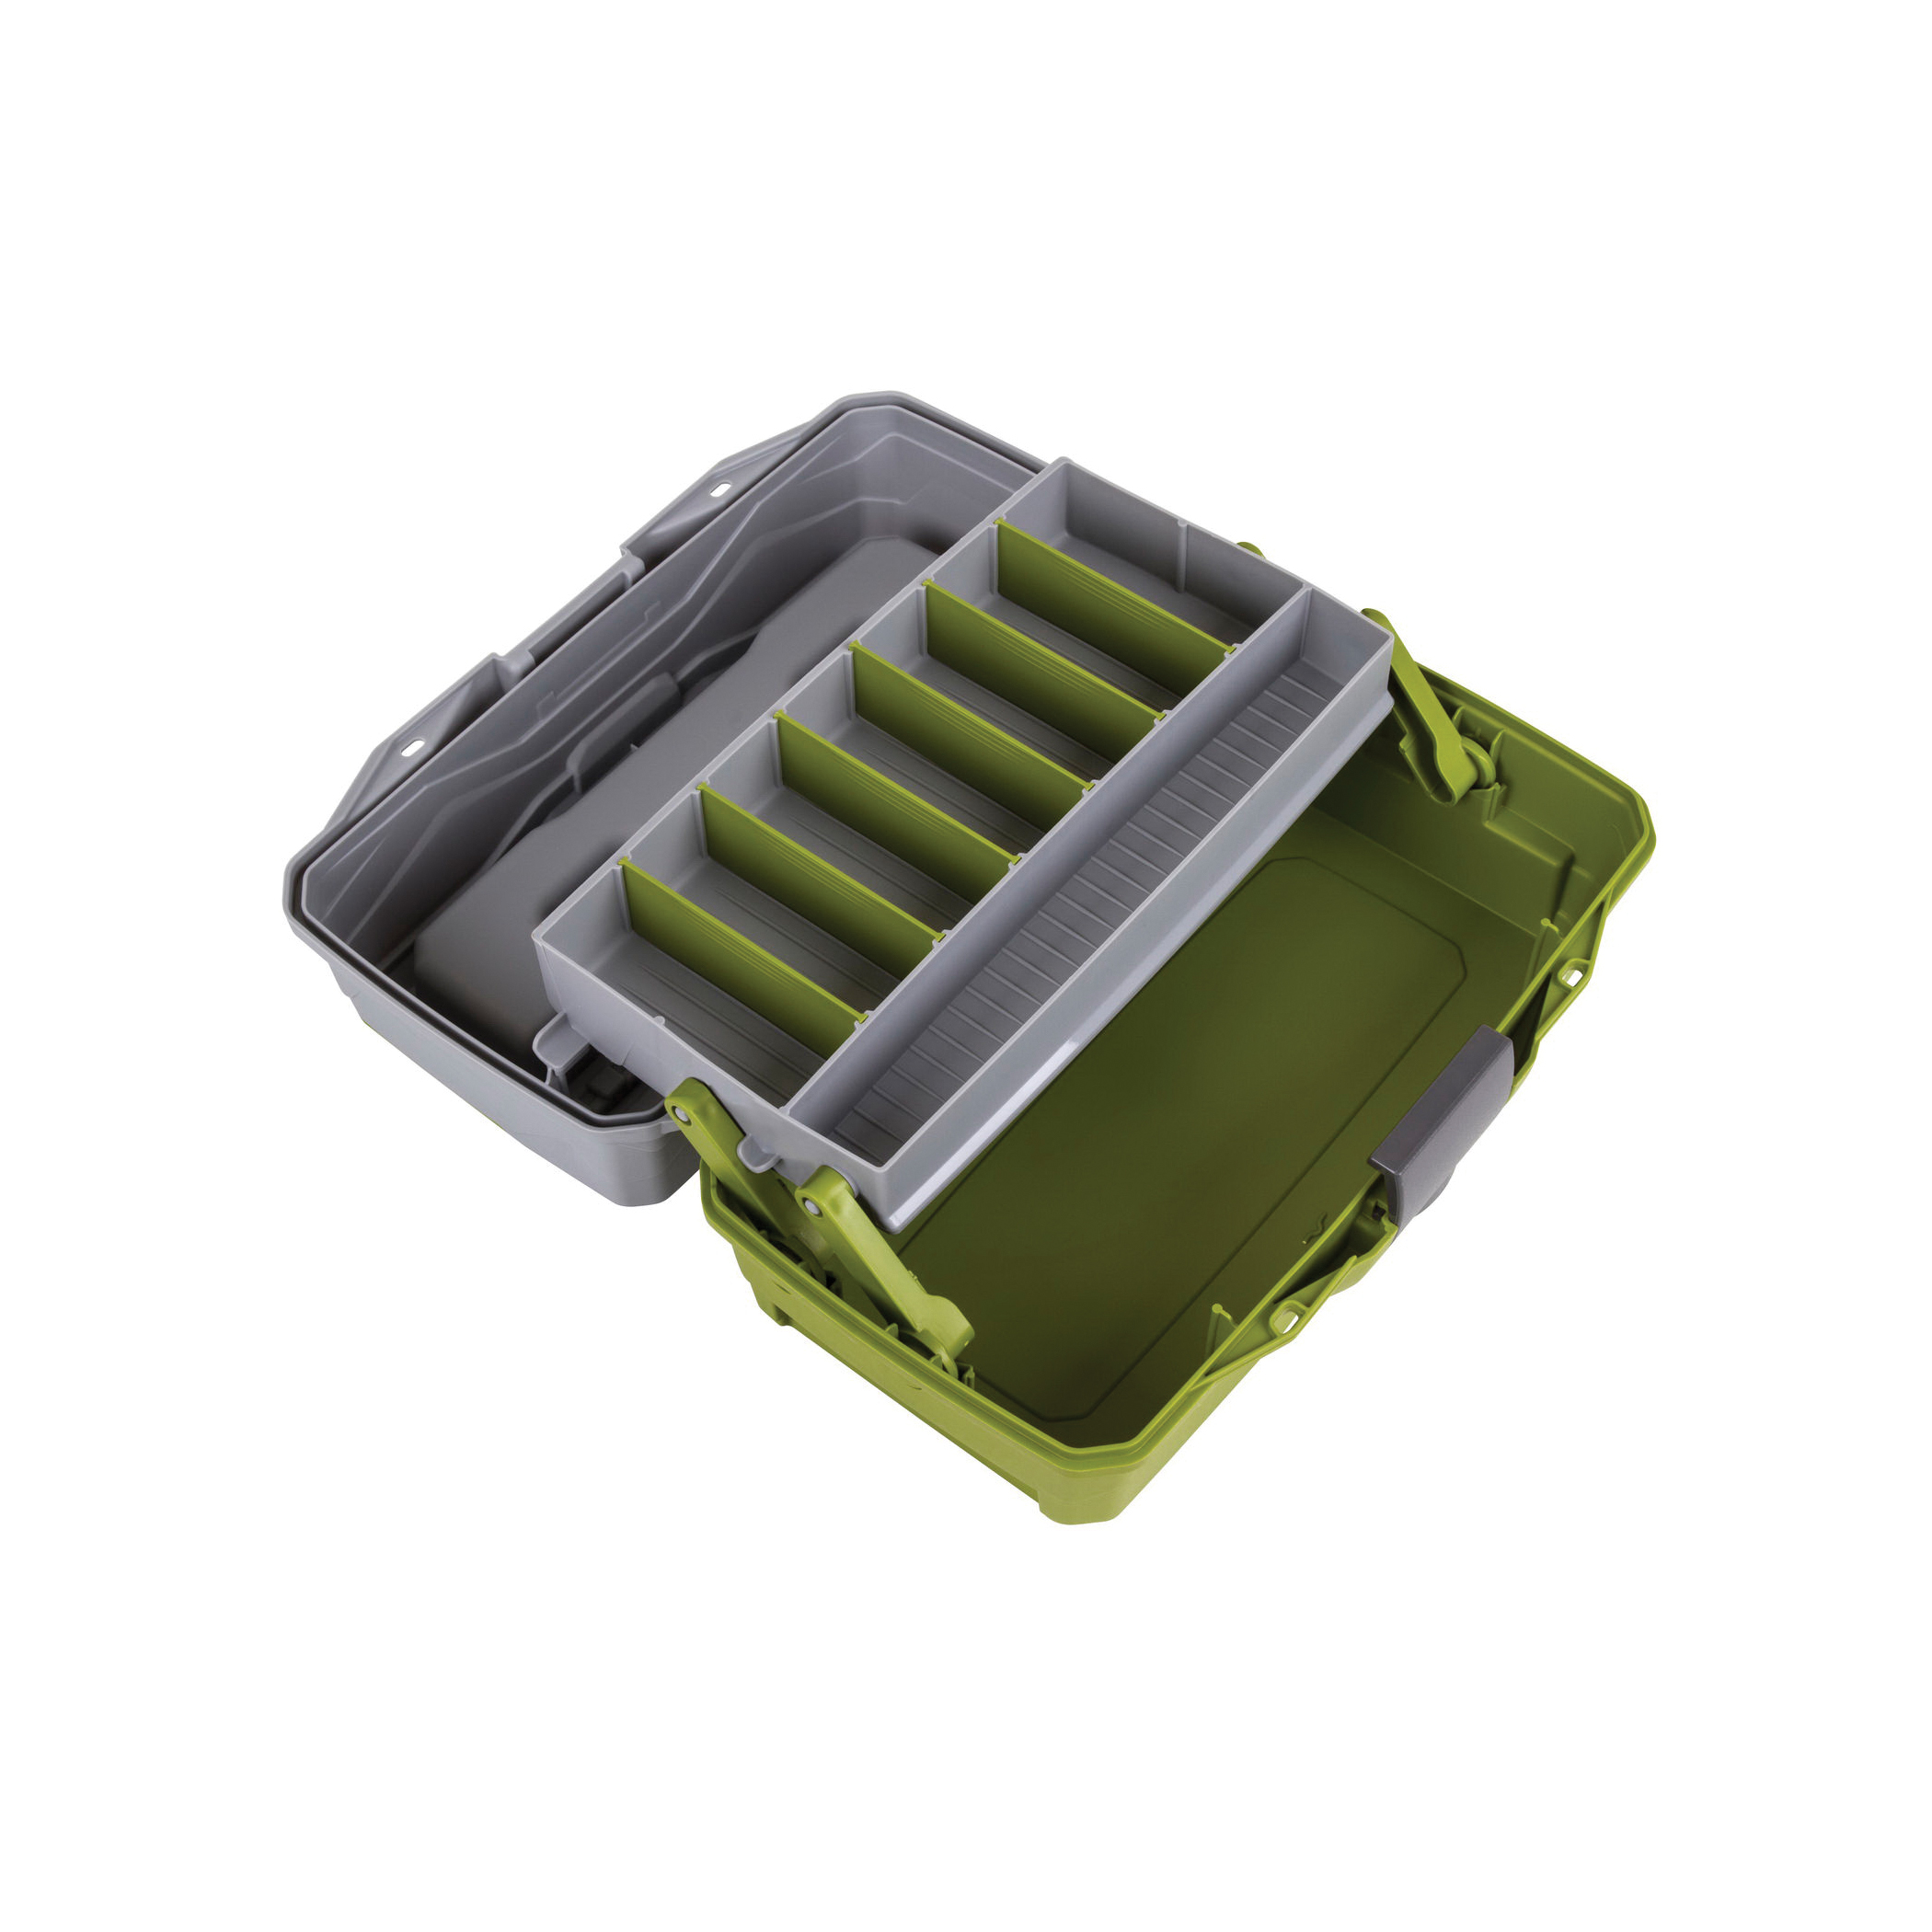  Flambeau Outdoors 6381TB 1-Tray Classic Tray Tackle Box,  Portable Tackle Storage - Green/Gray : Sports & Outdoors